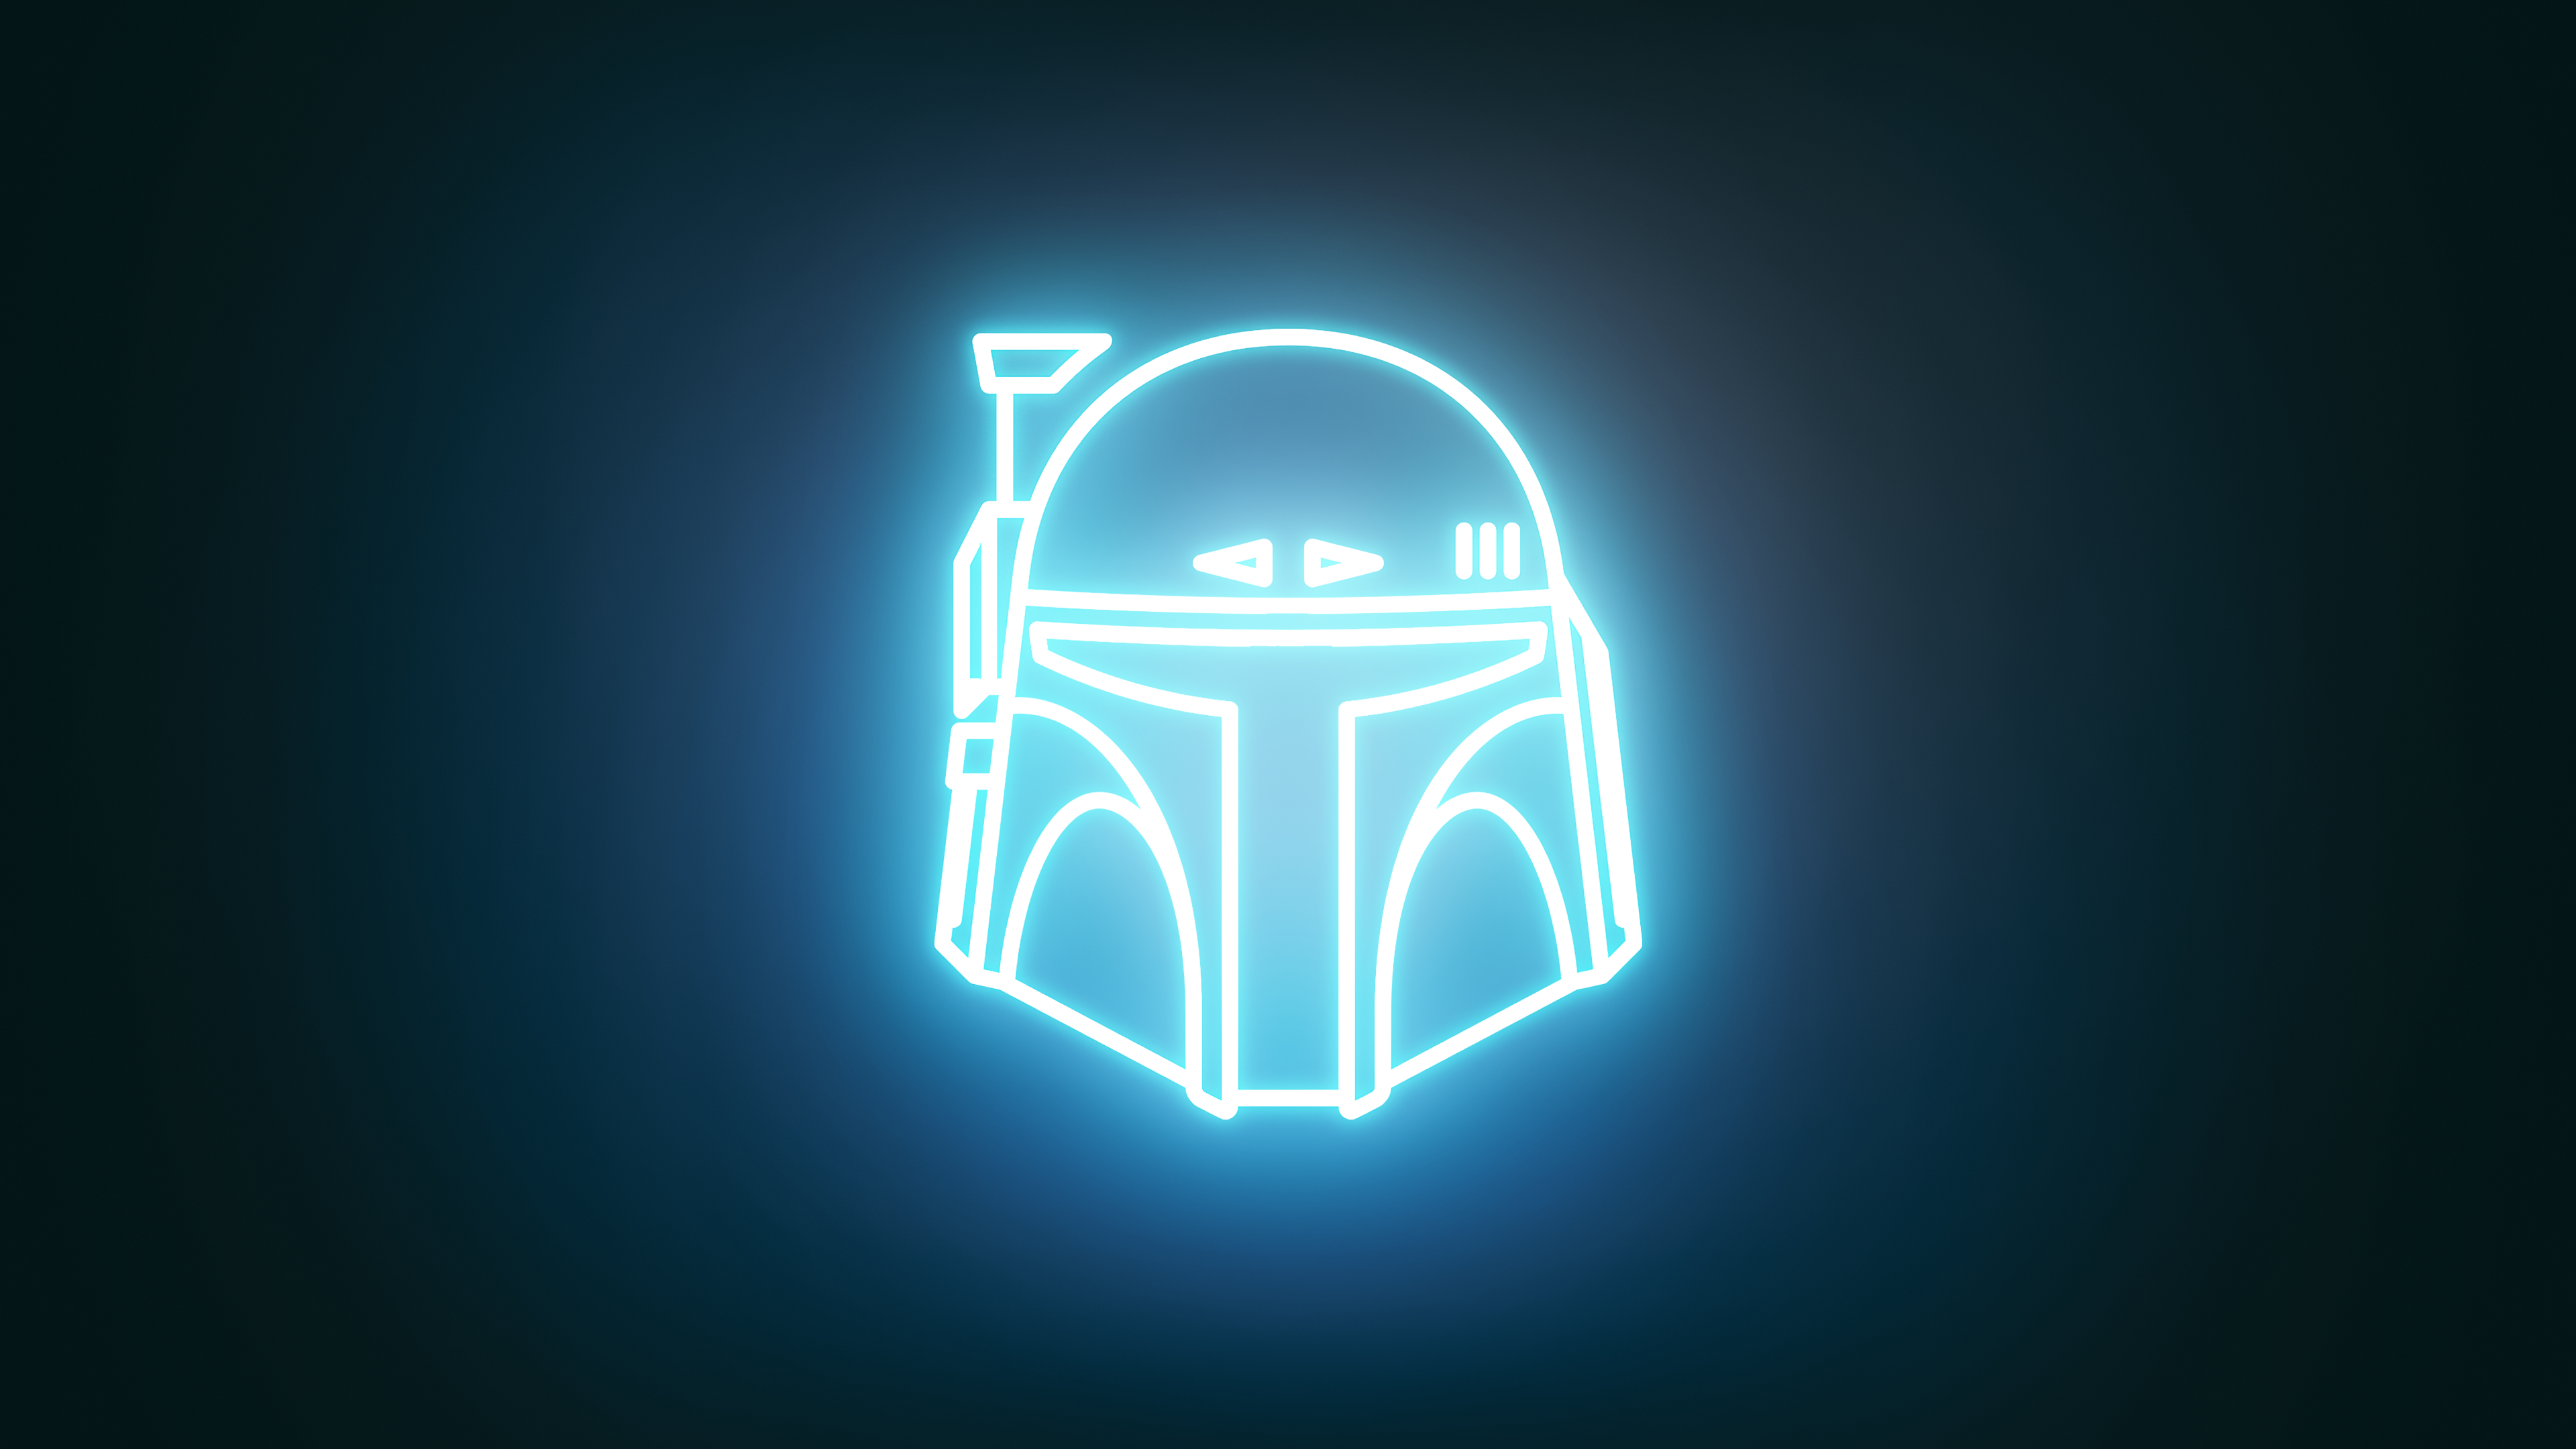 General 3840x2160 minimalism simple background neon Star Wars Boba Fett helmet Mandalorians dark background blue background glowing